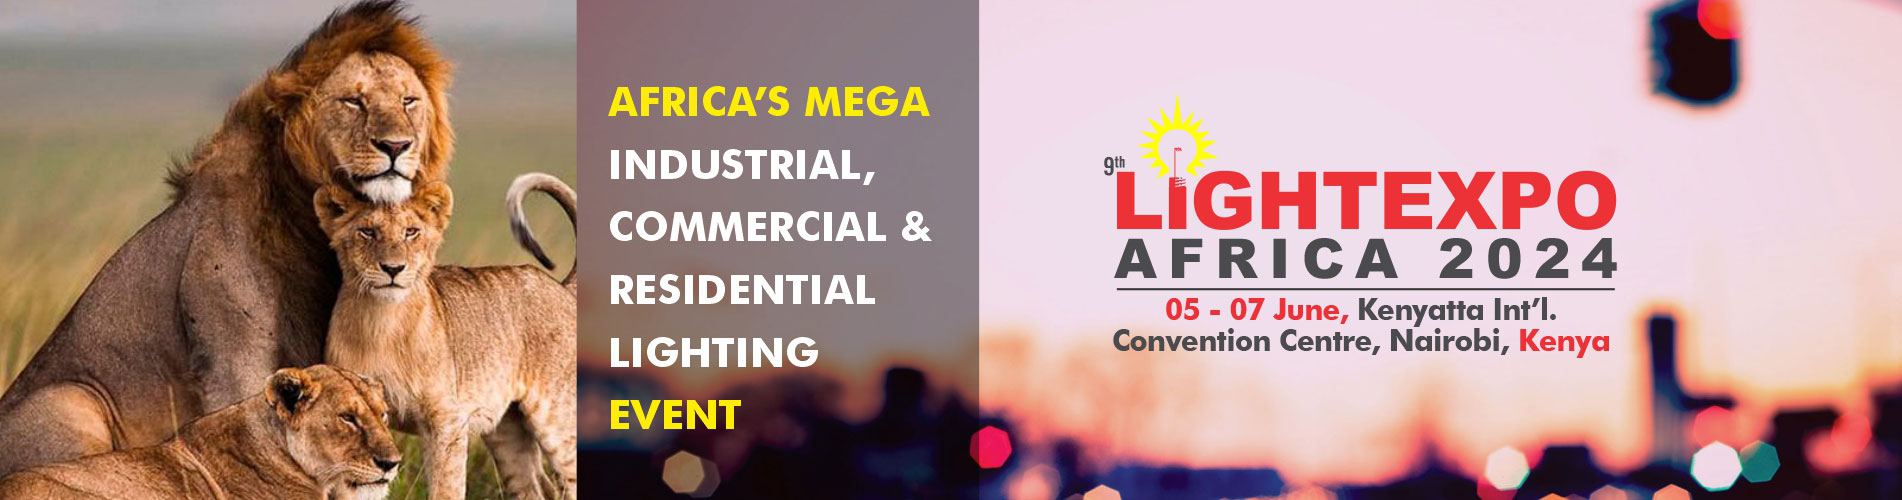 Lightexpo Kenya 2024 - International Industrial, Commercial & Residential Lighting Show Africa